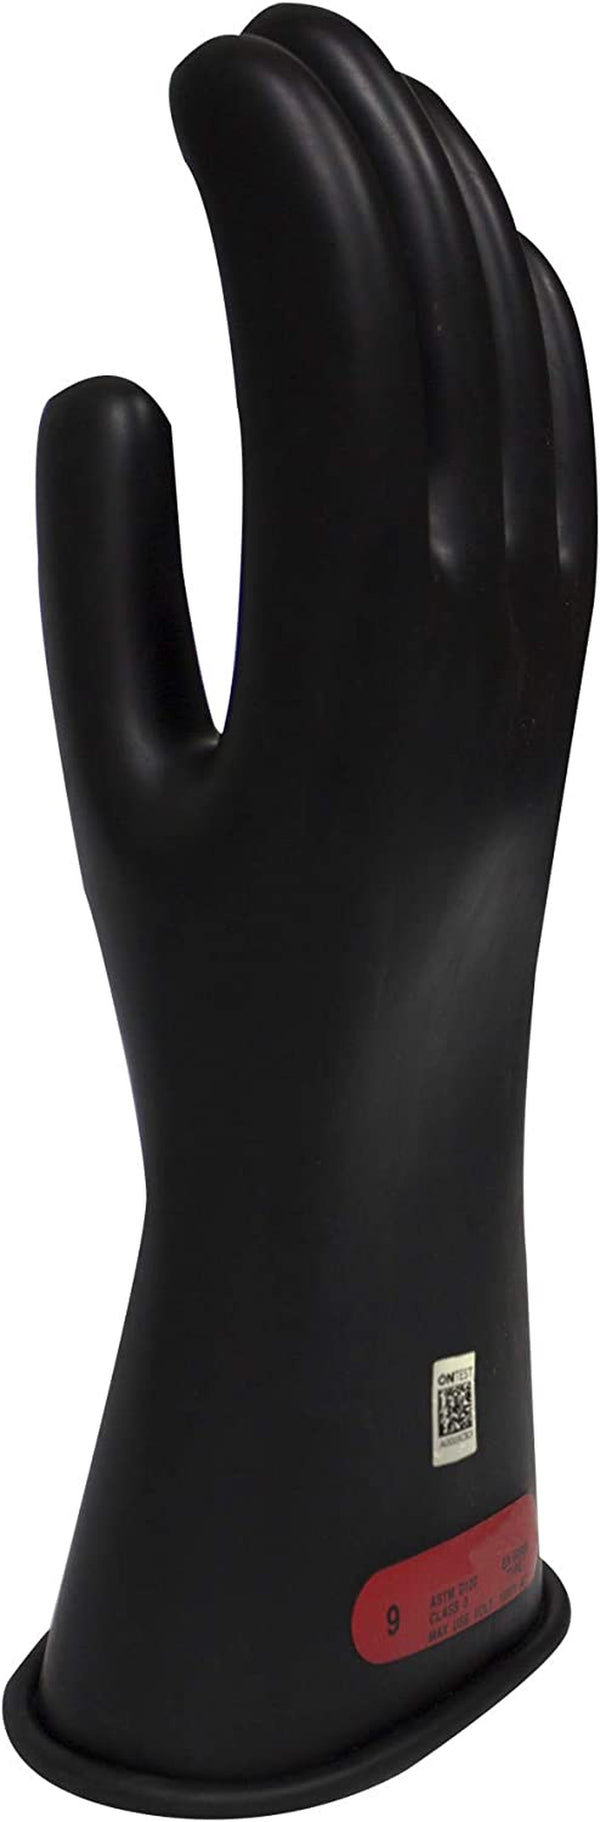 Class 0 Black Rubber Voltage Insulating Gloves, Max. Use Voltage 1000V AC/1500V DC (GC0B11)